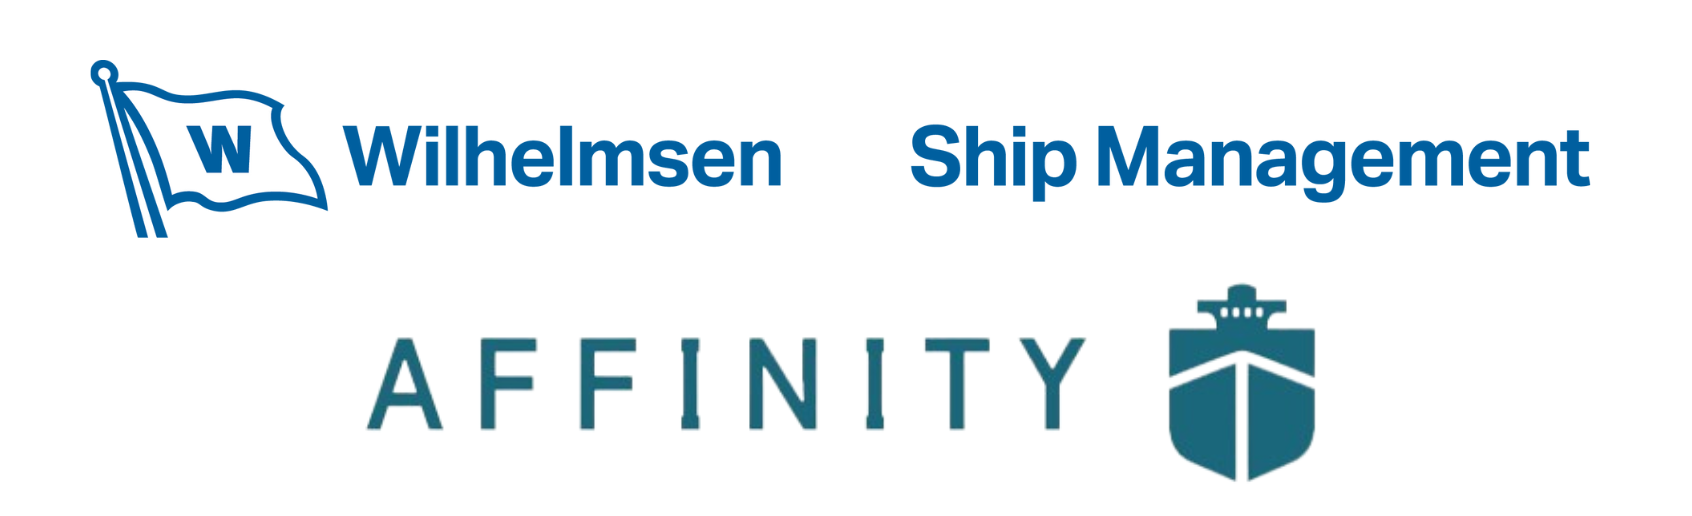 Wilhelmsen and Affinity Logo.png